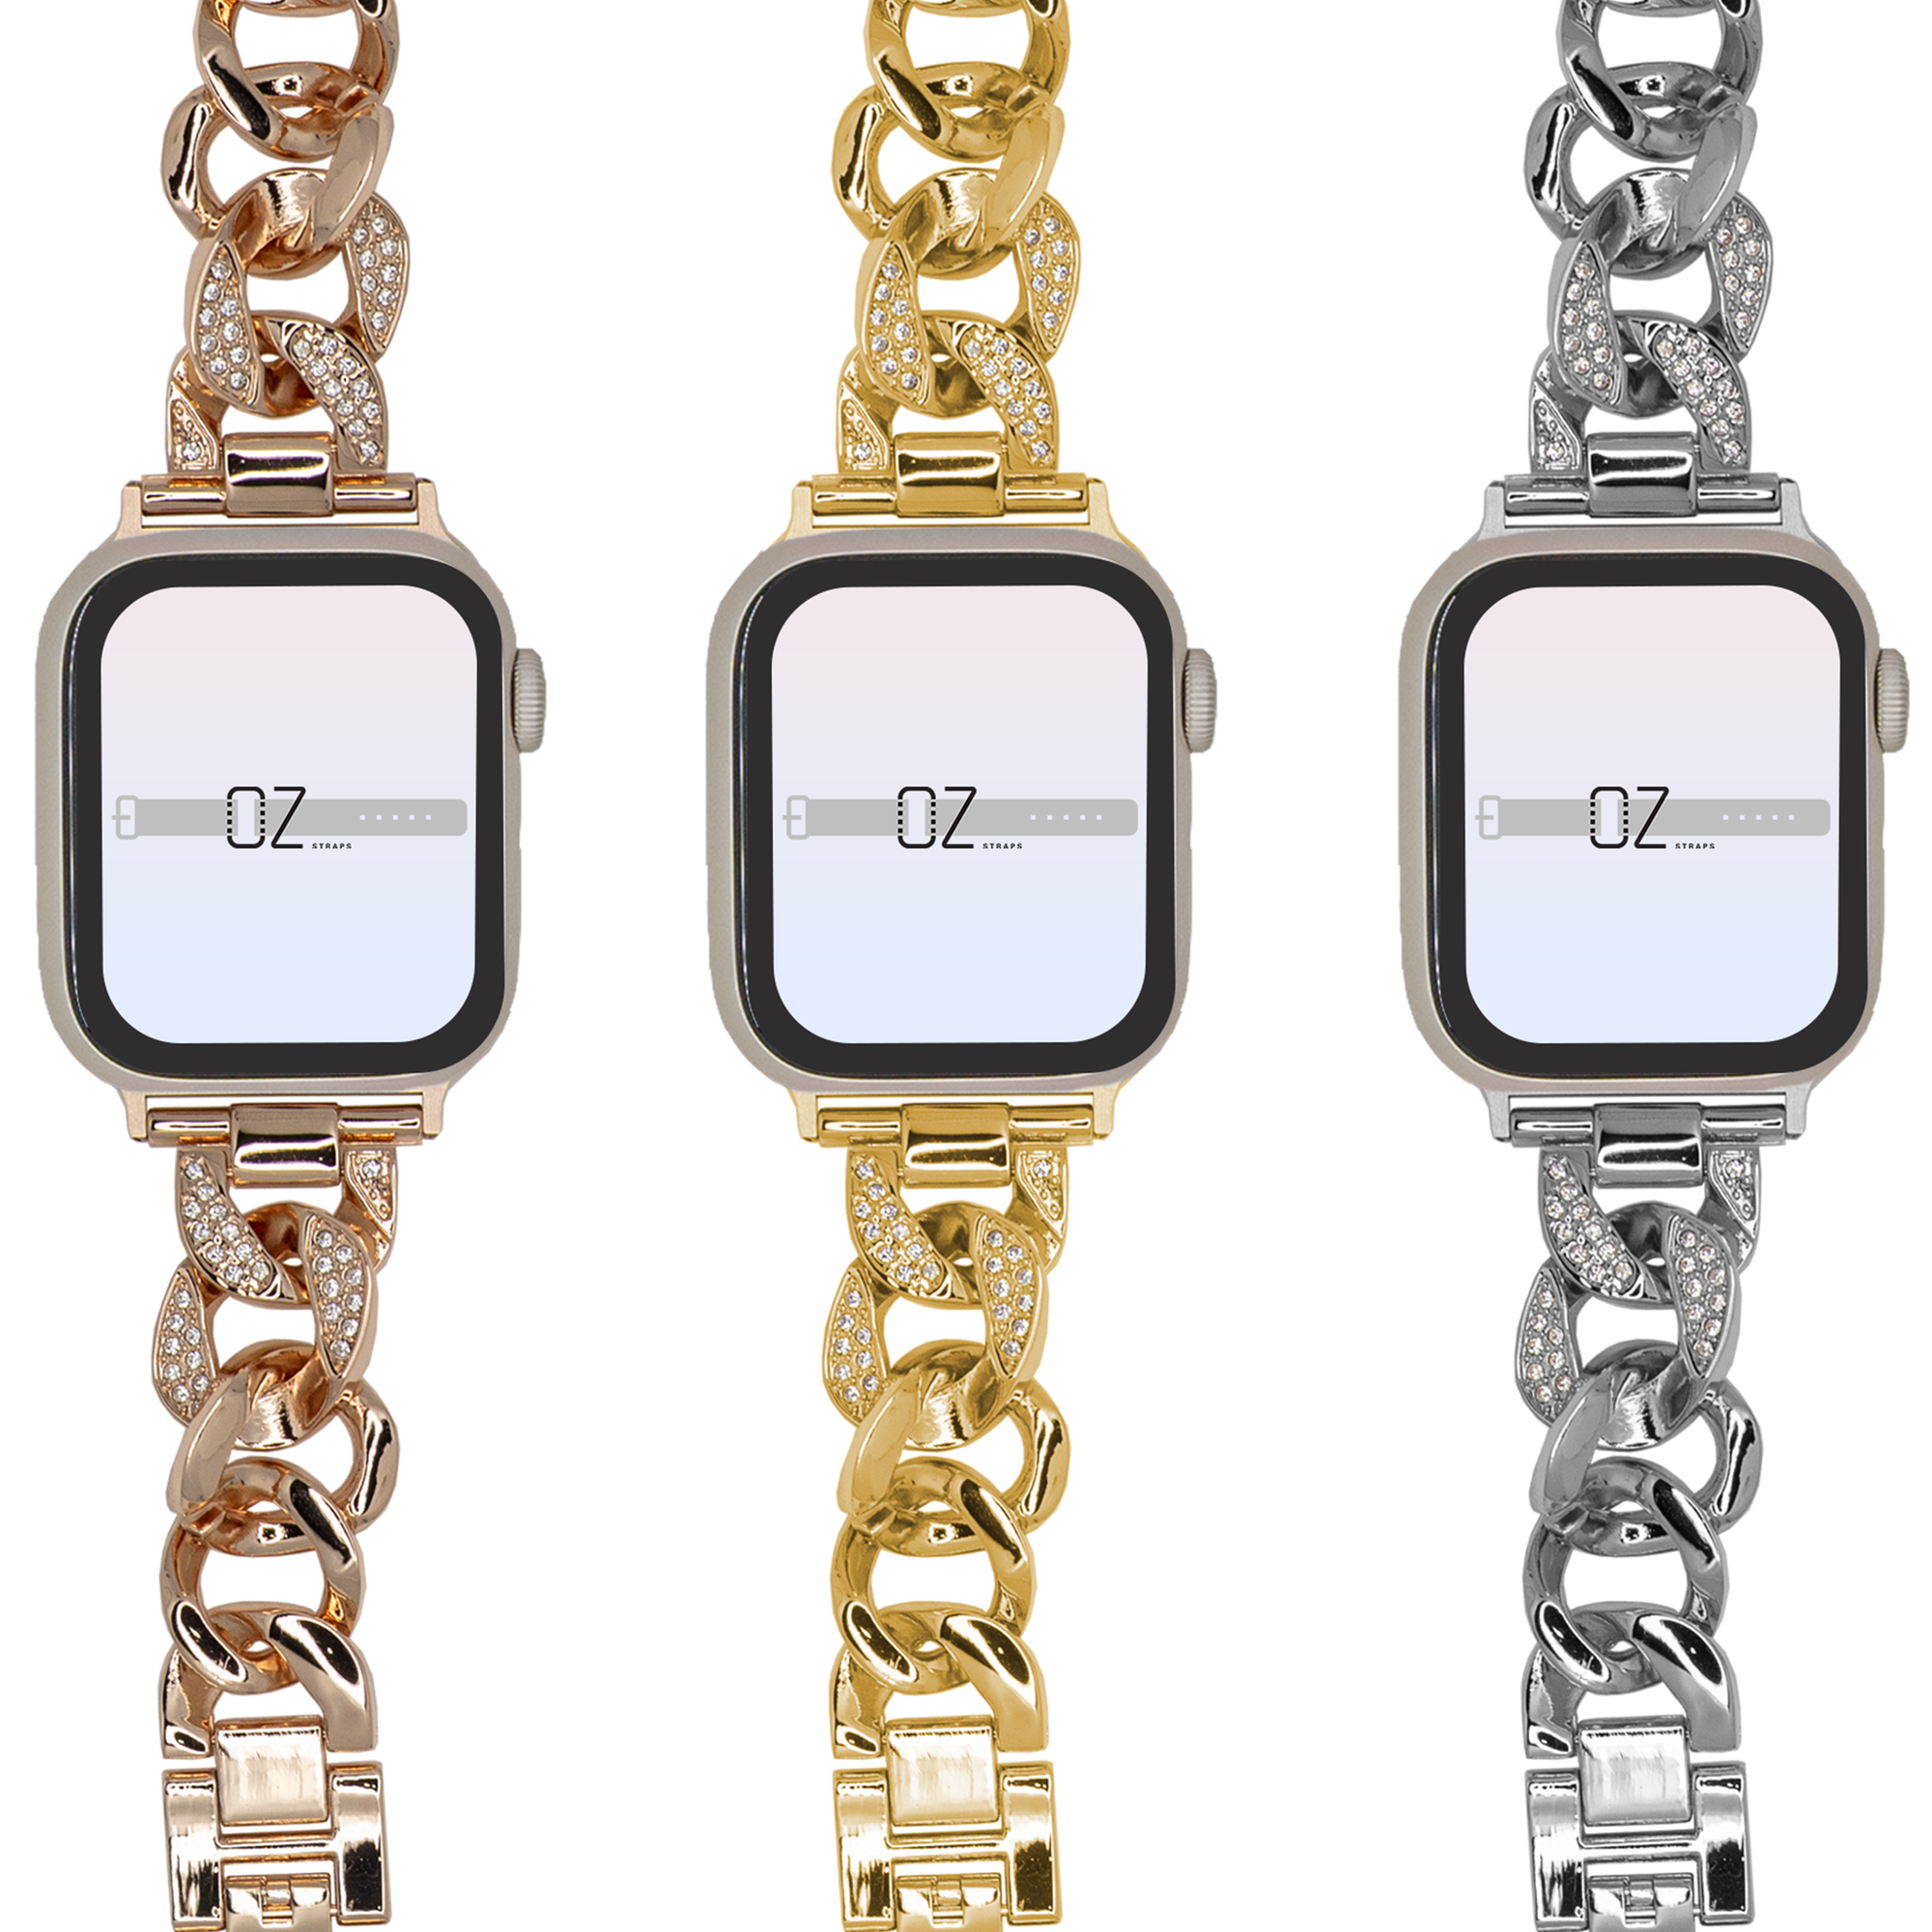 Louis Vuitton Apple Watch Band -  Australia